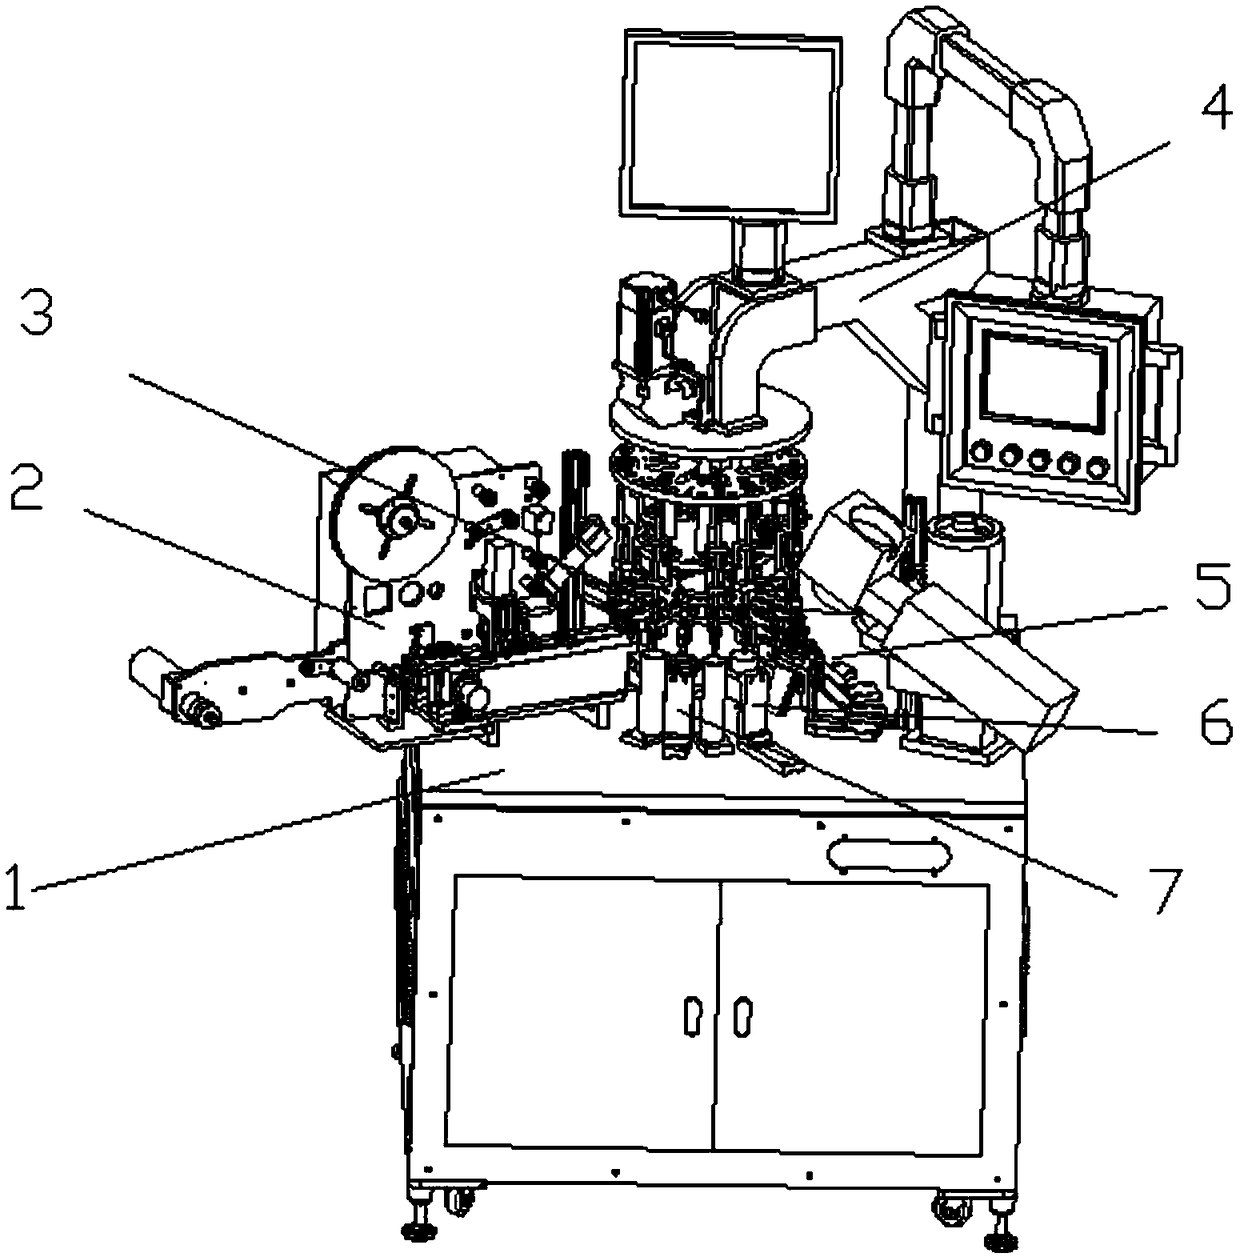 Rotary tower type detecting, marking and braiding integrated machine